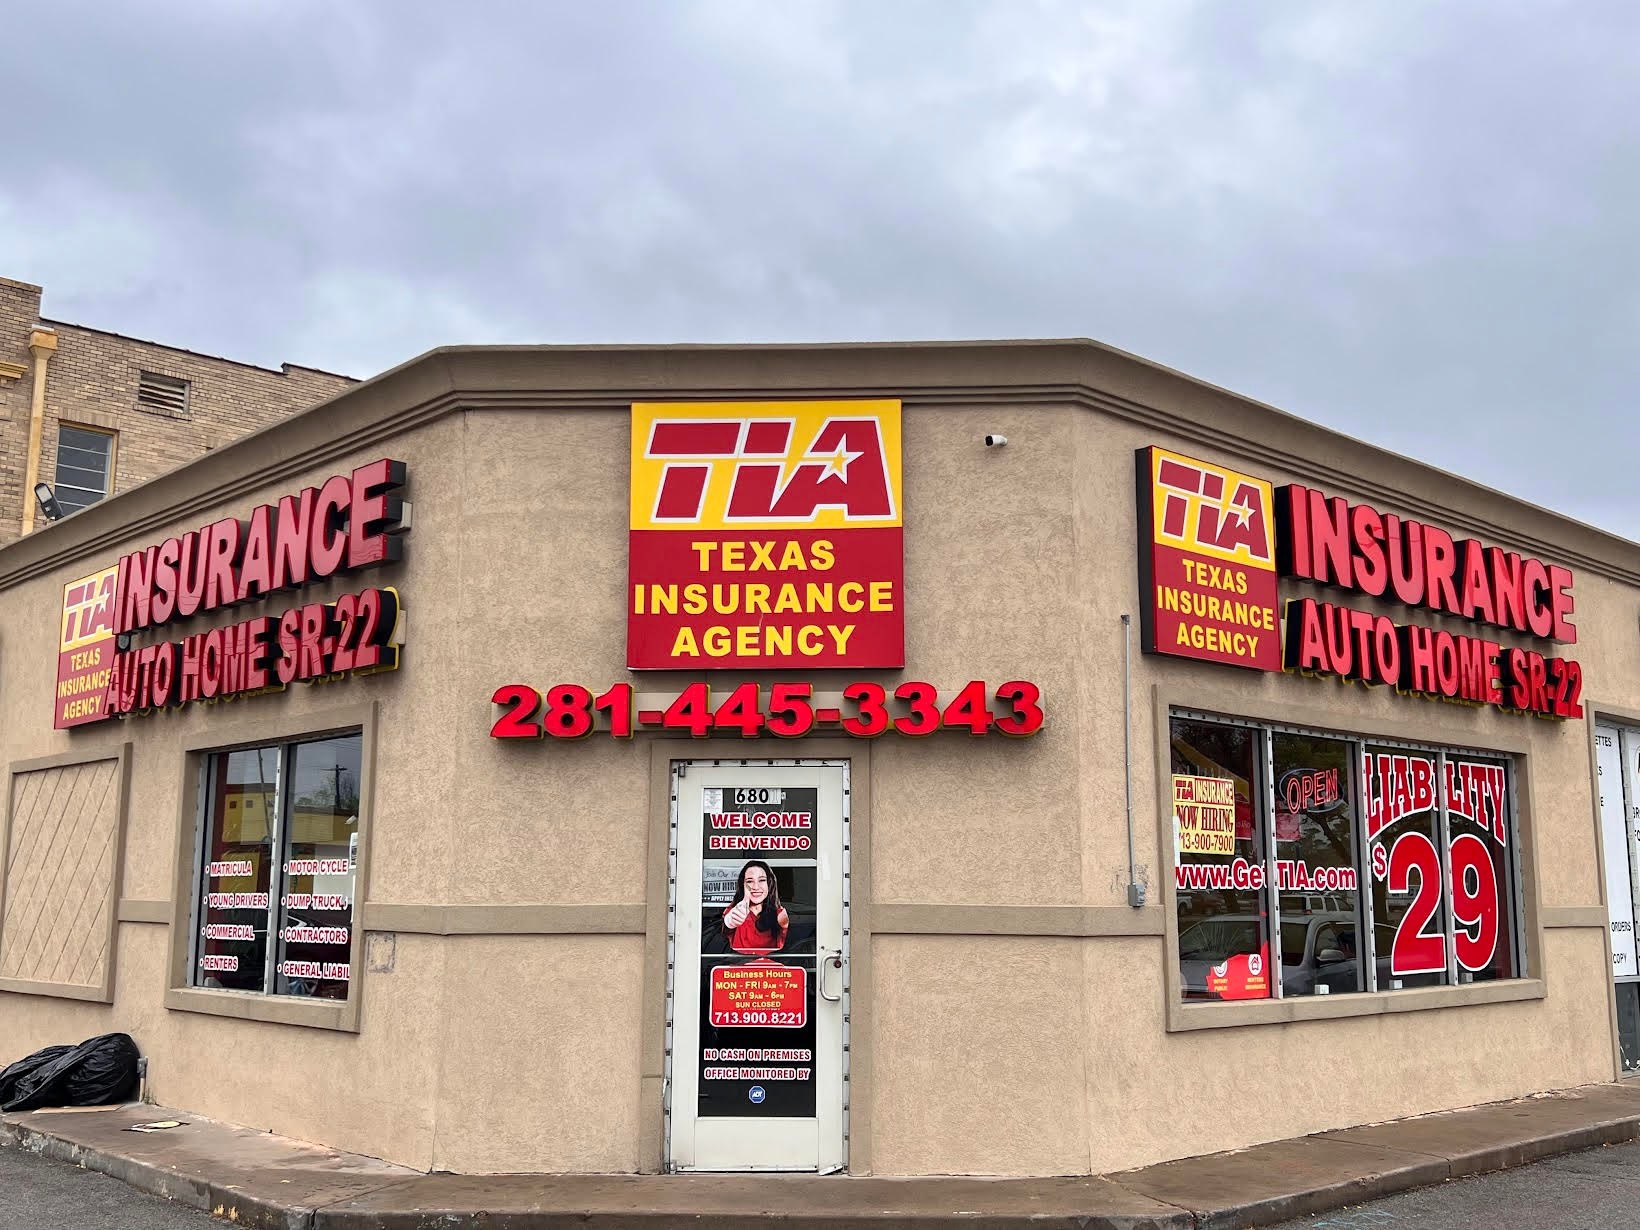 Texas Insurance Agency #1011